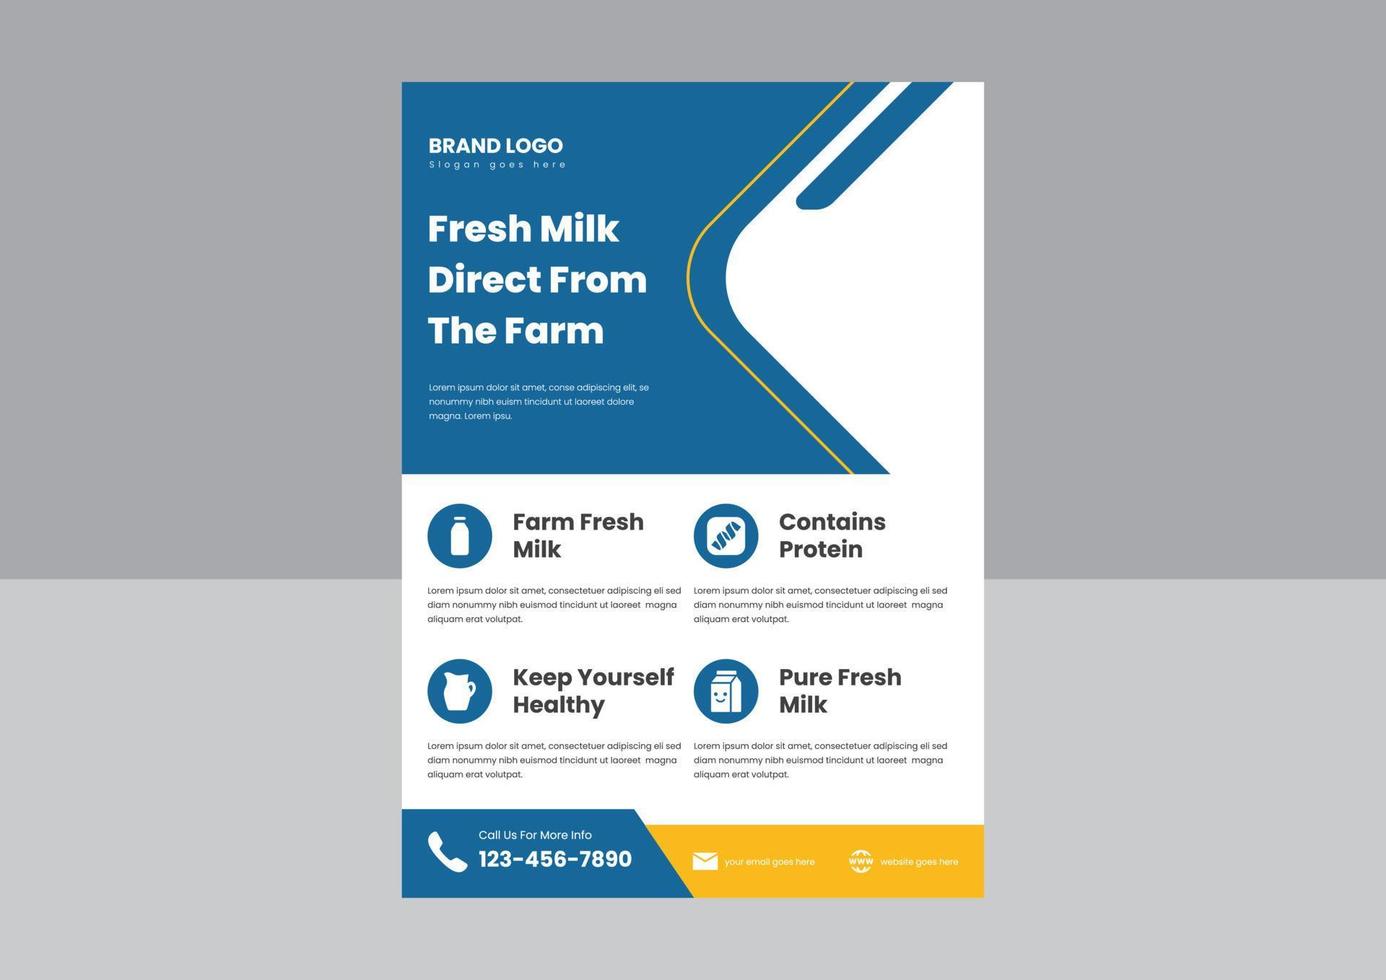 plantilla de diseño de folleto de volante de entrega de leche fresca de granja pura. diseño de afiches de volantes de leche fresca de granja lechera. vector